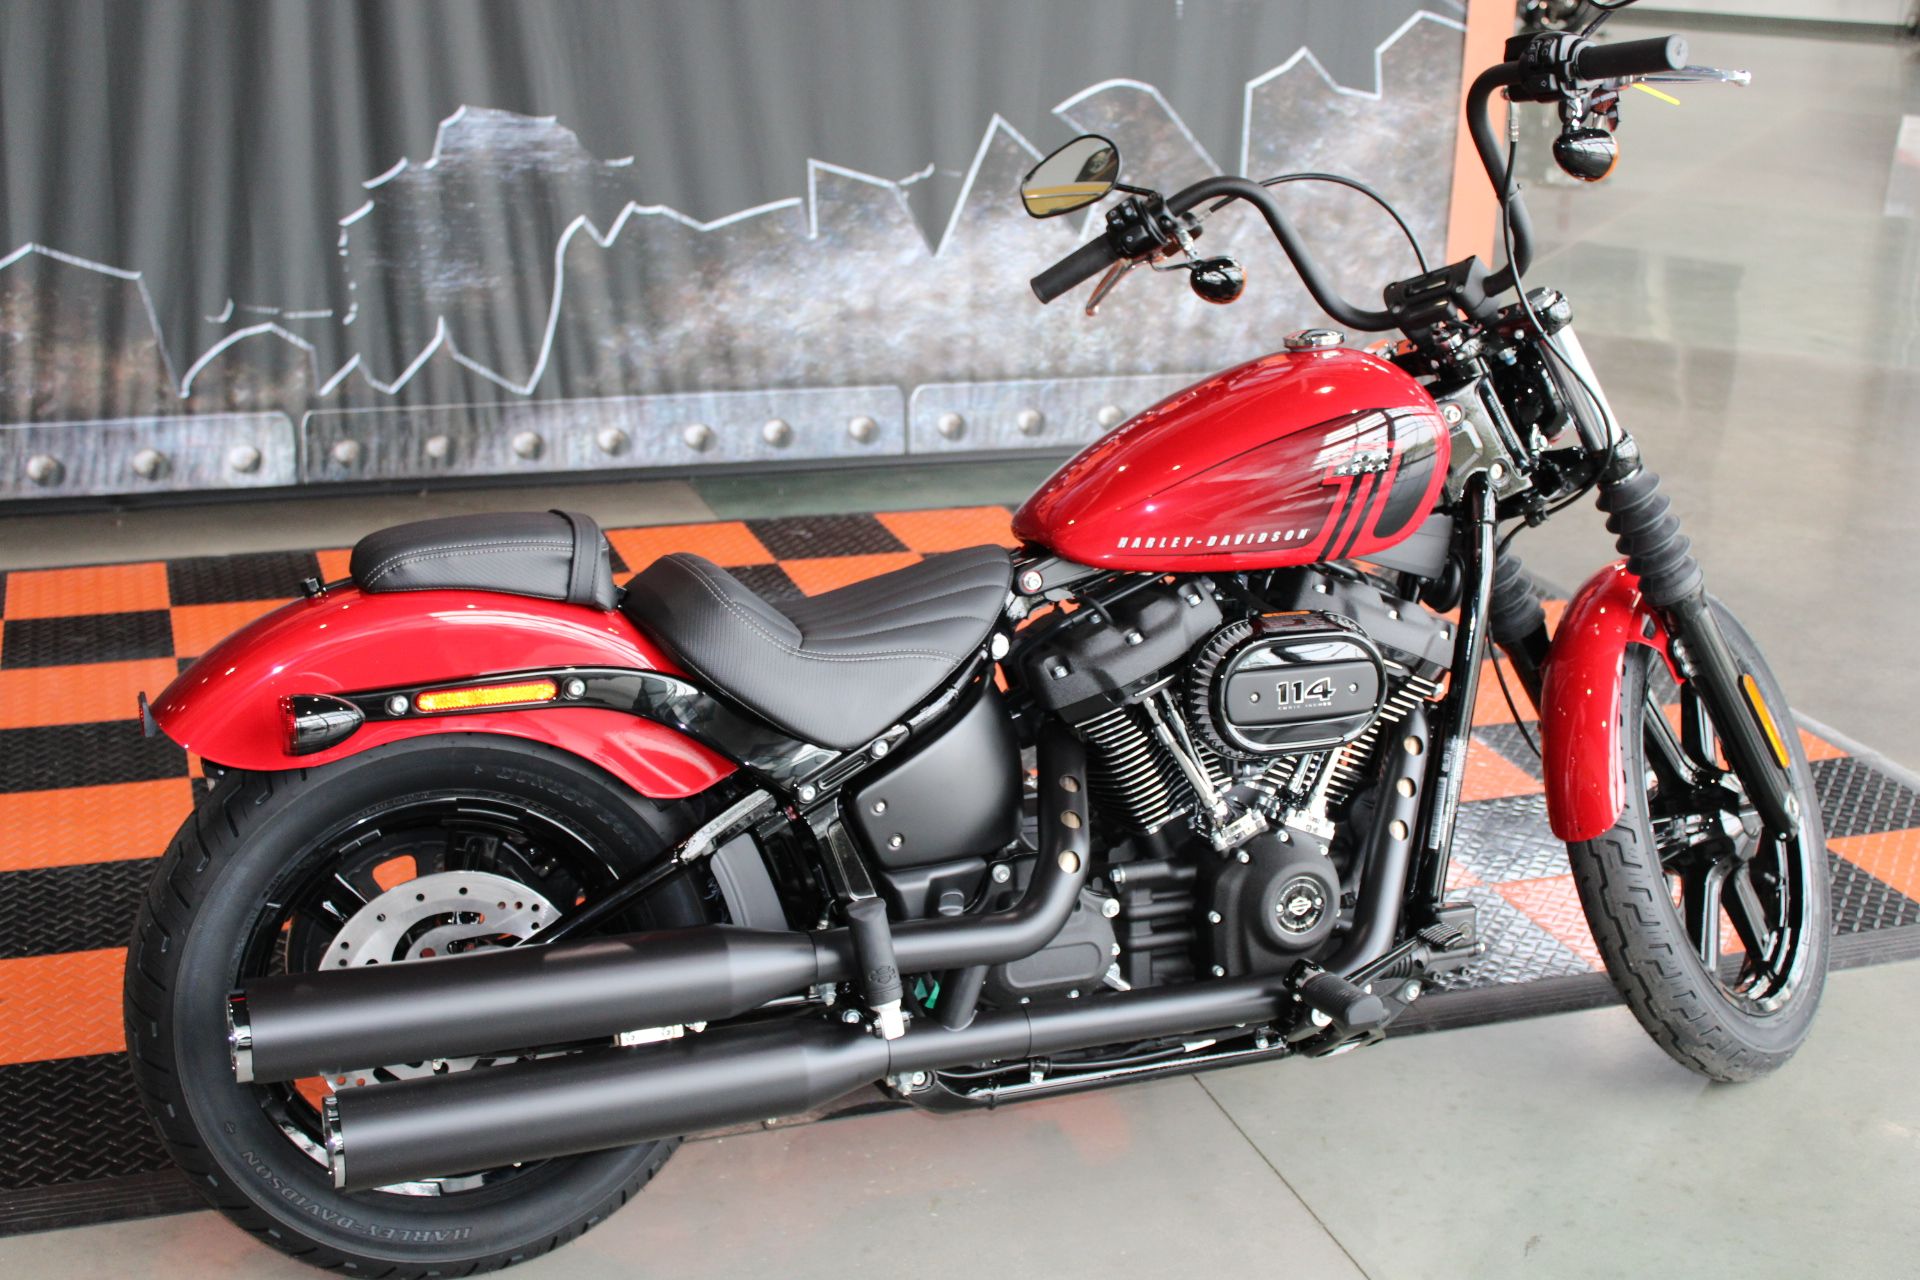 2022 Harley-Davidson Street Bob® 114 in Shorewood, Illinois - Photo 11